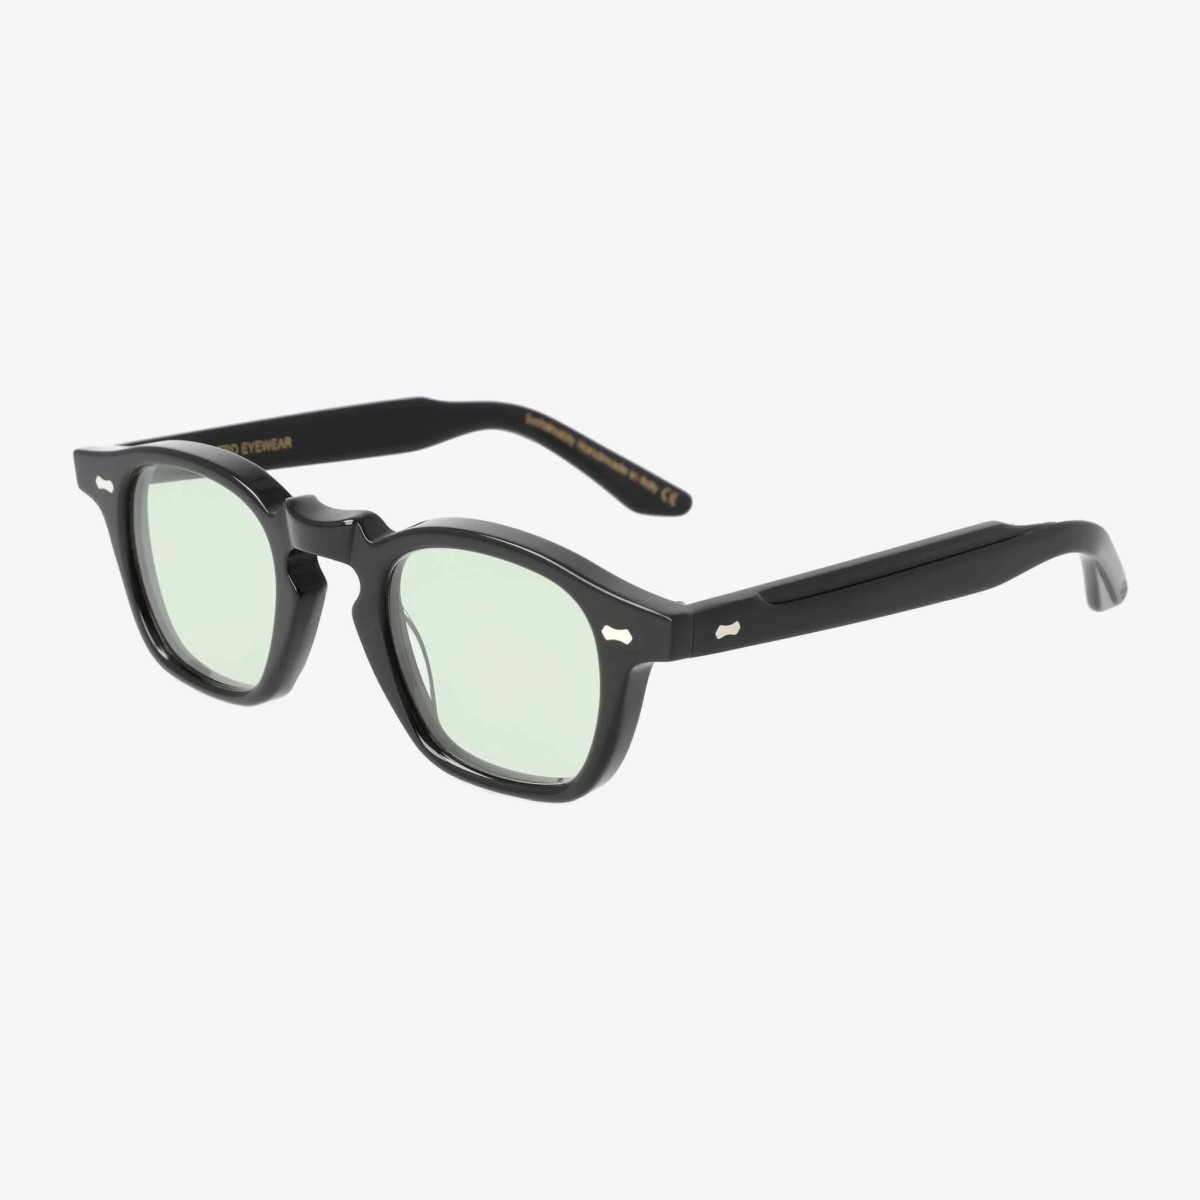 TBD Eyewear Cord black frame green lenses sunglasses